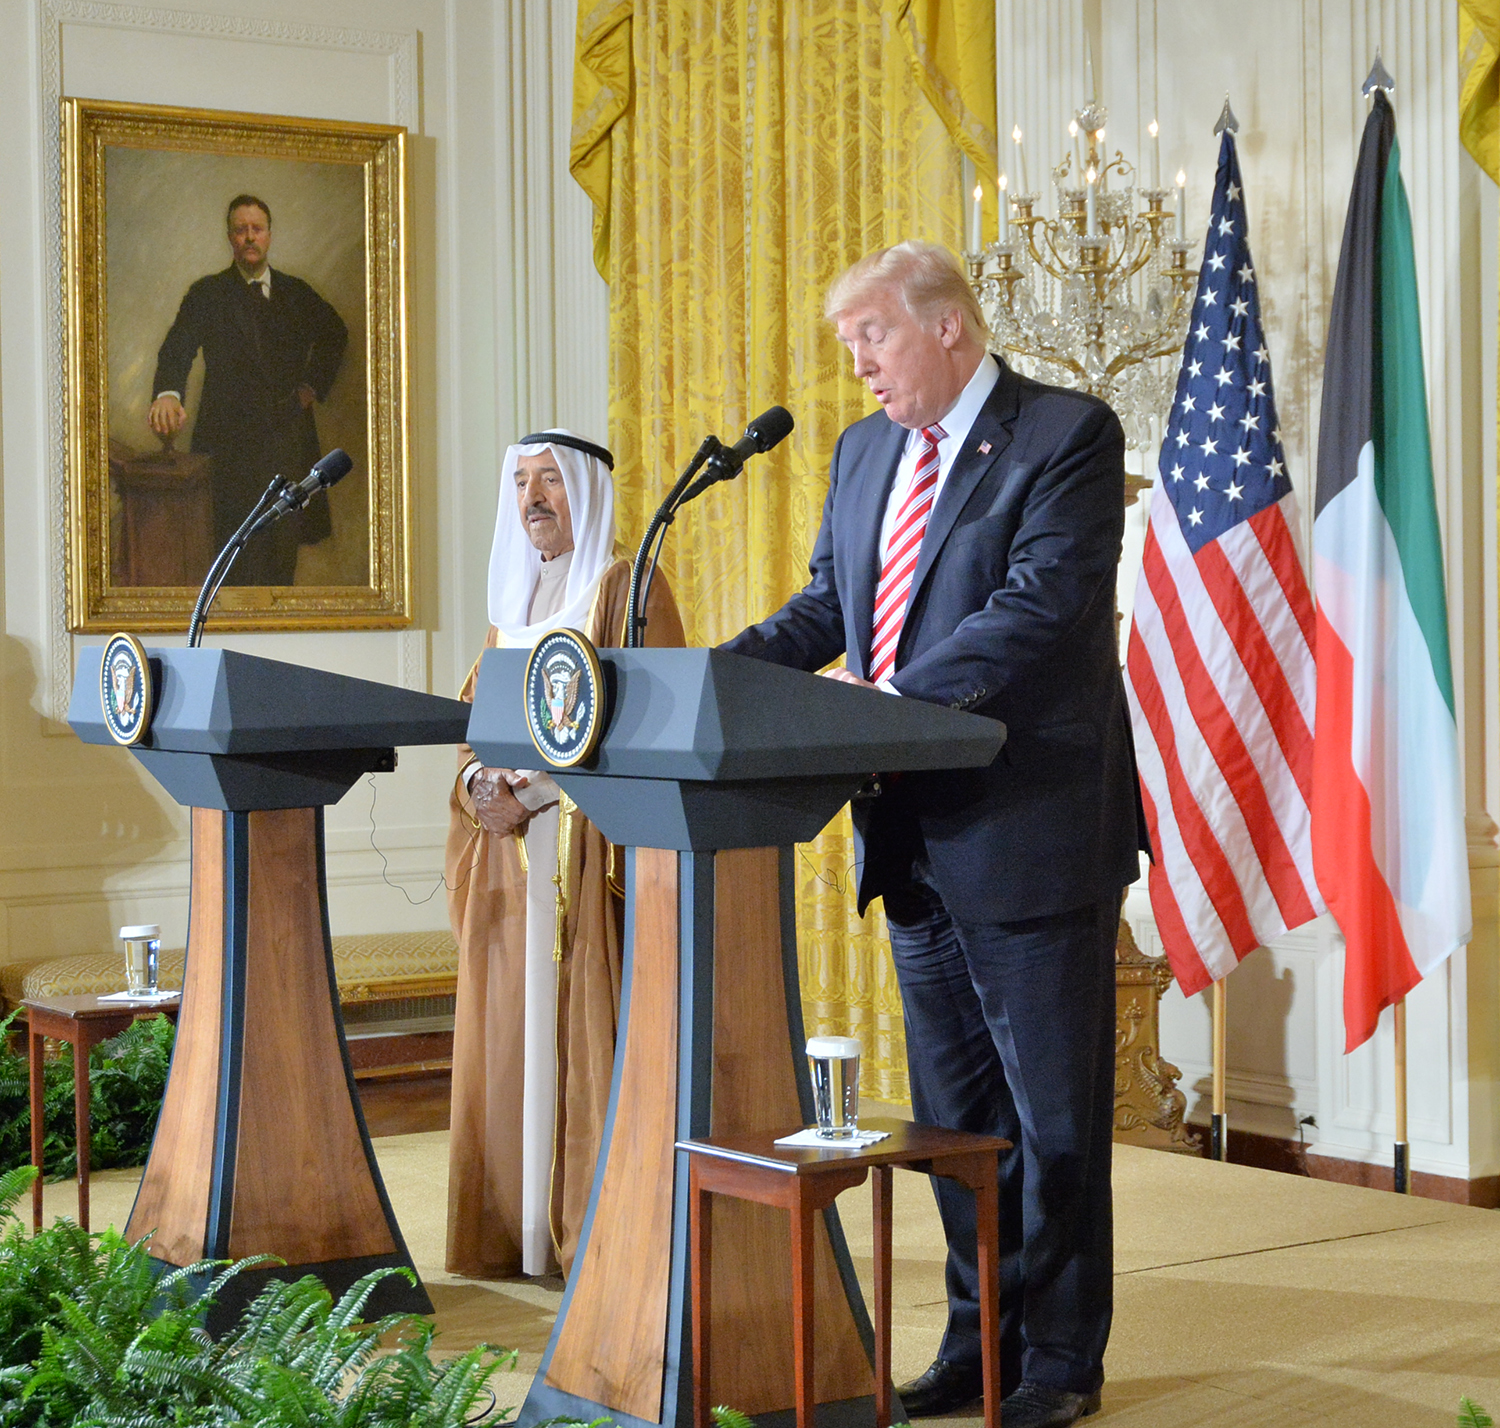 His Highness the Amir Sheikh Sabah Al-Ahmad Al-Jaber Al-Sabah and US President Donald Trump